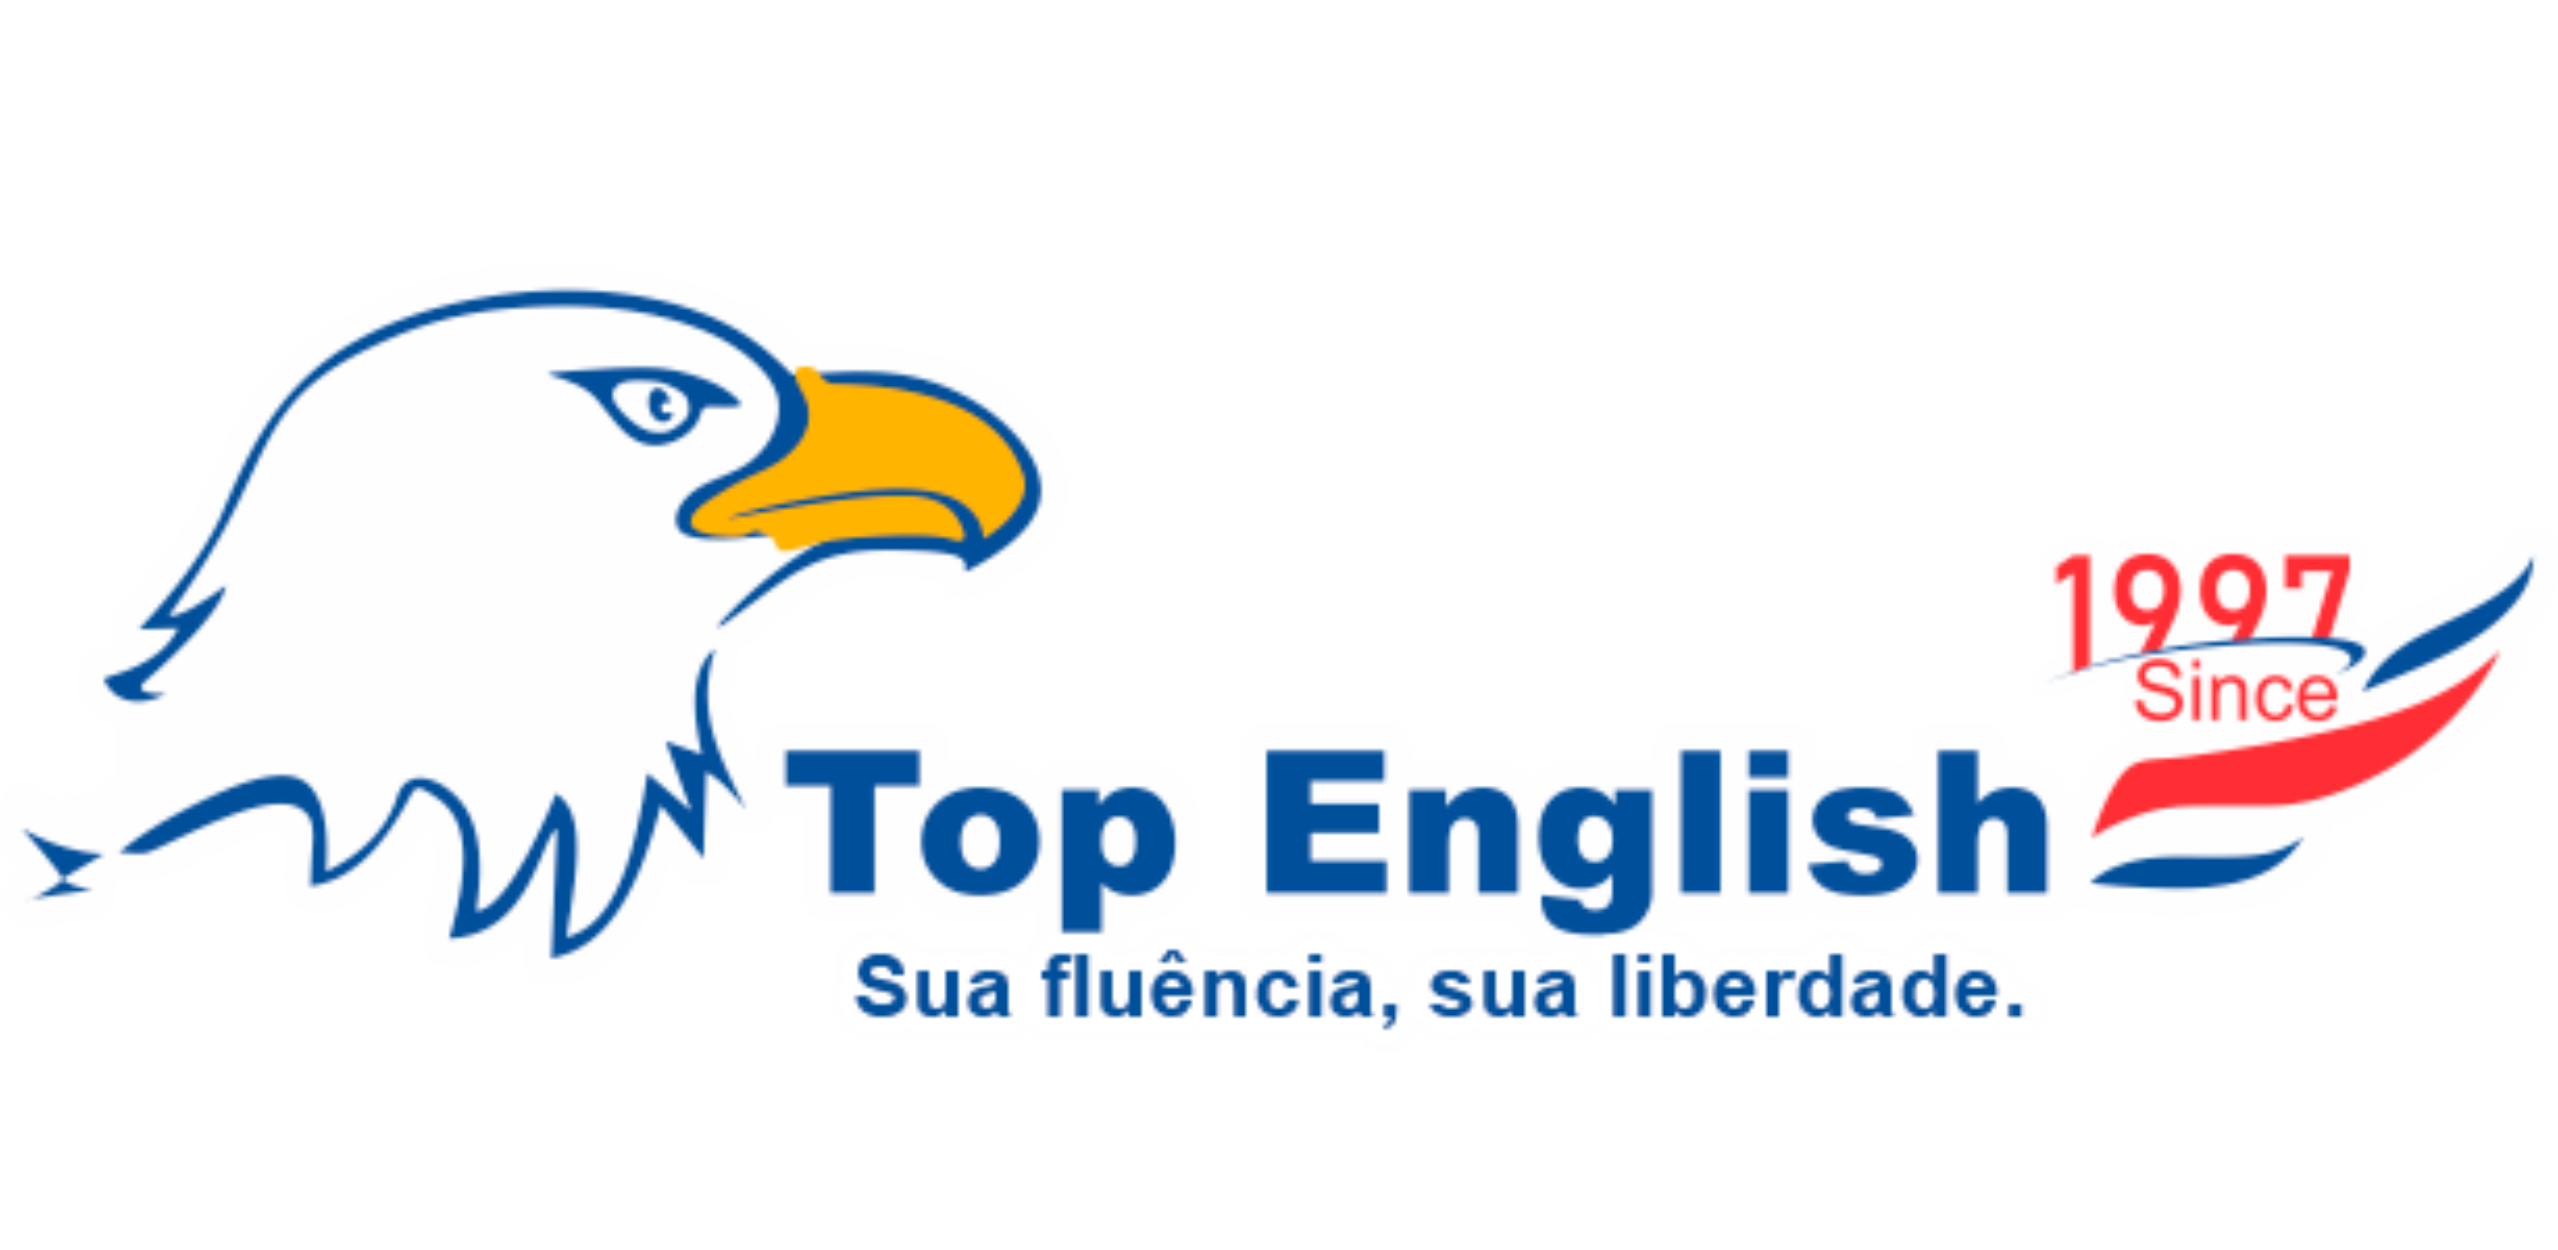 TOP ENGLISH TERESINA